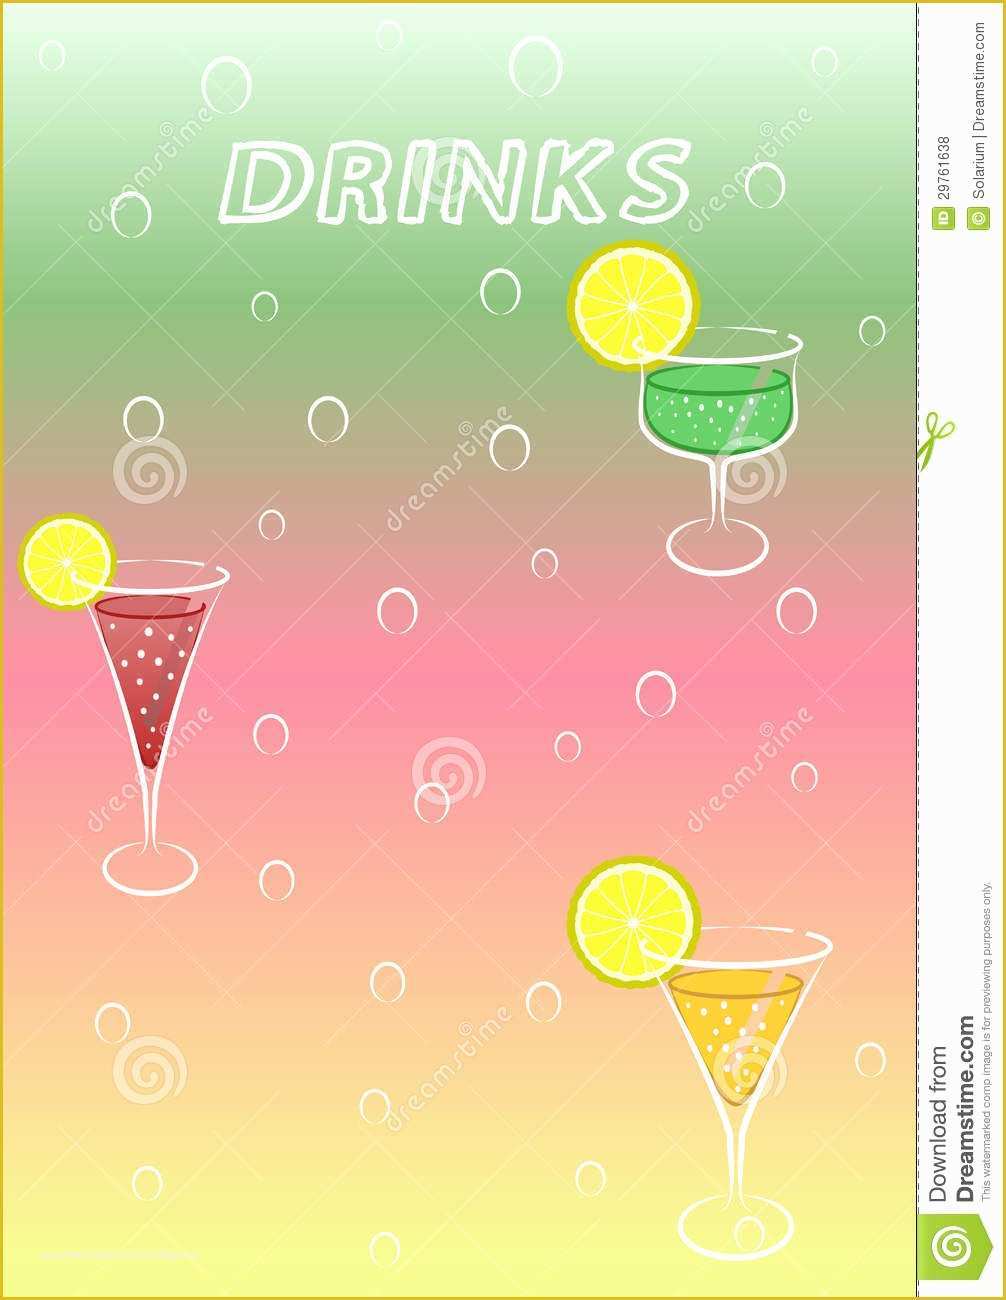 Drinks Menu Template Free Download Of Drinks Menu Stock Vector Illustration Of Invitation